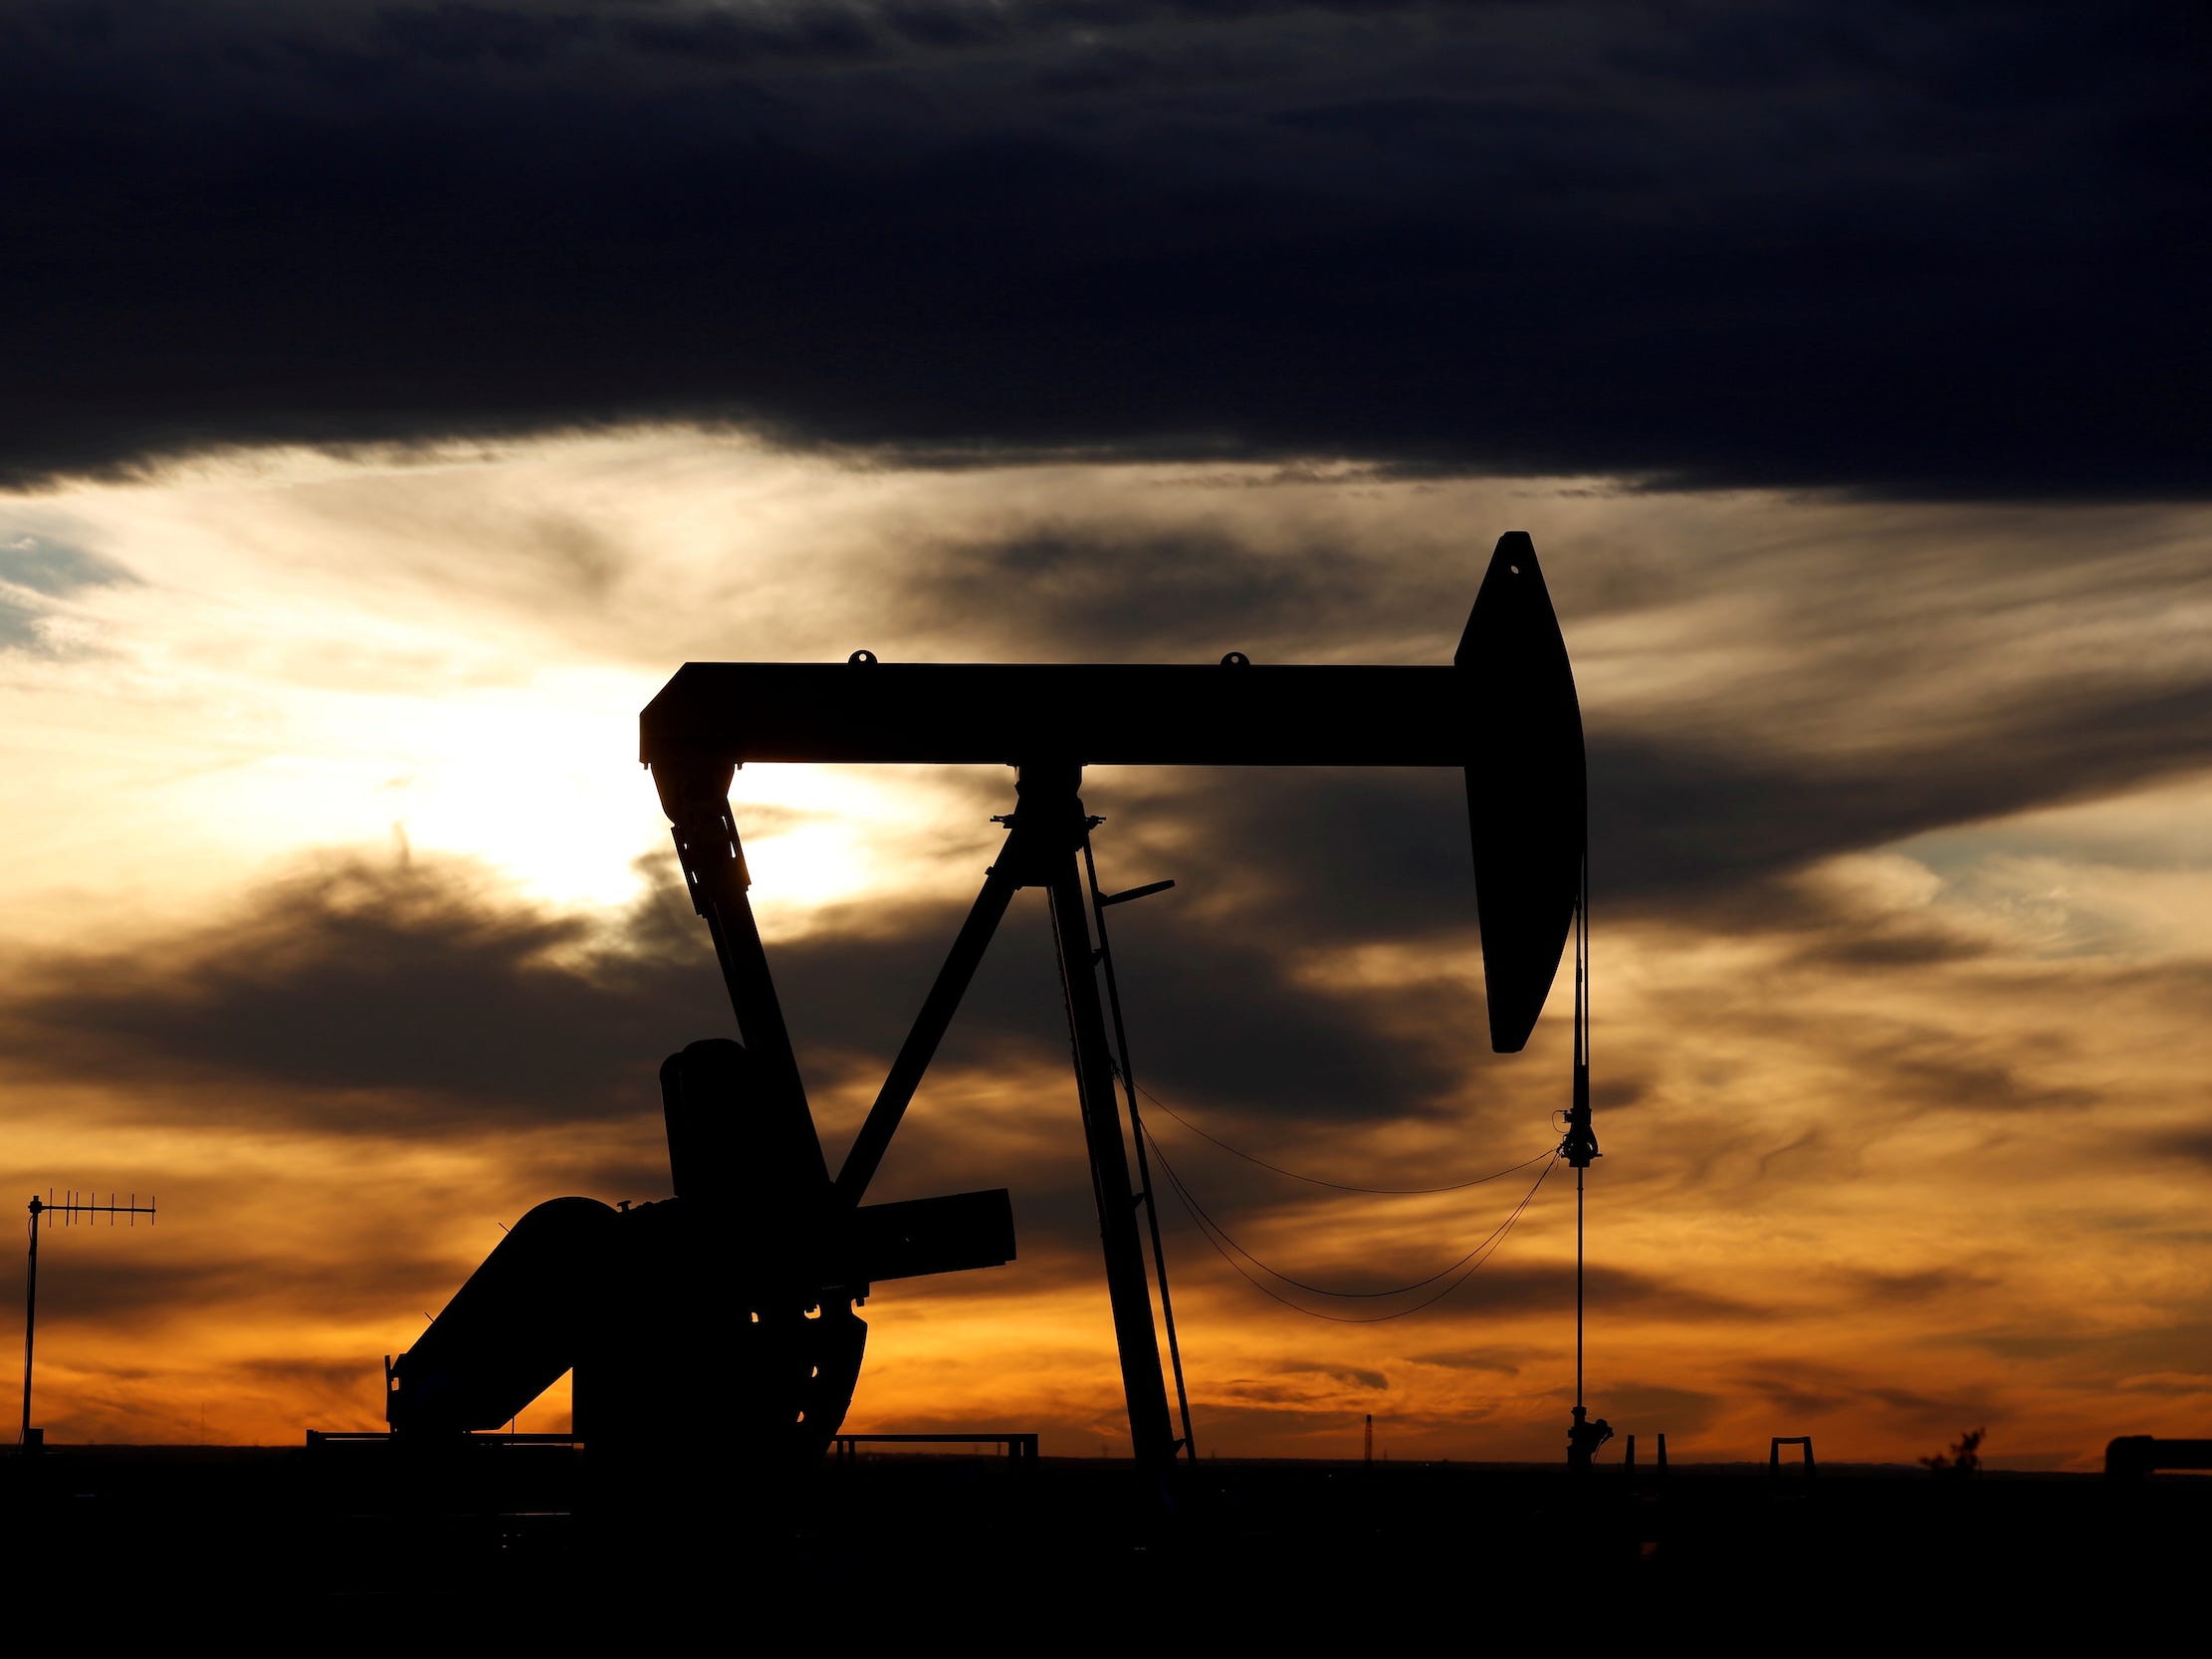 crude oil pump jack in texas field sunset backdrop